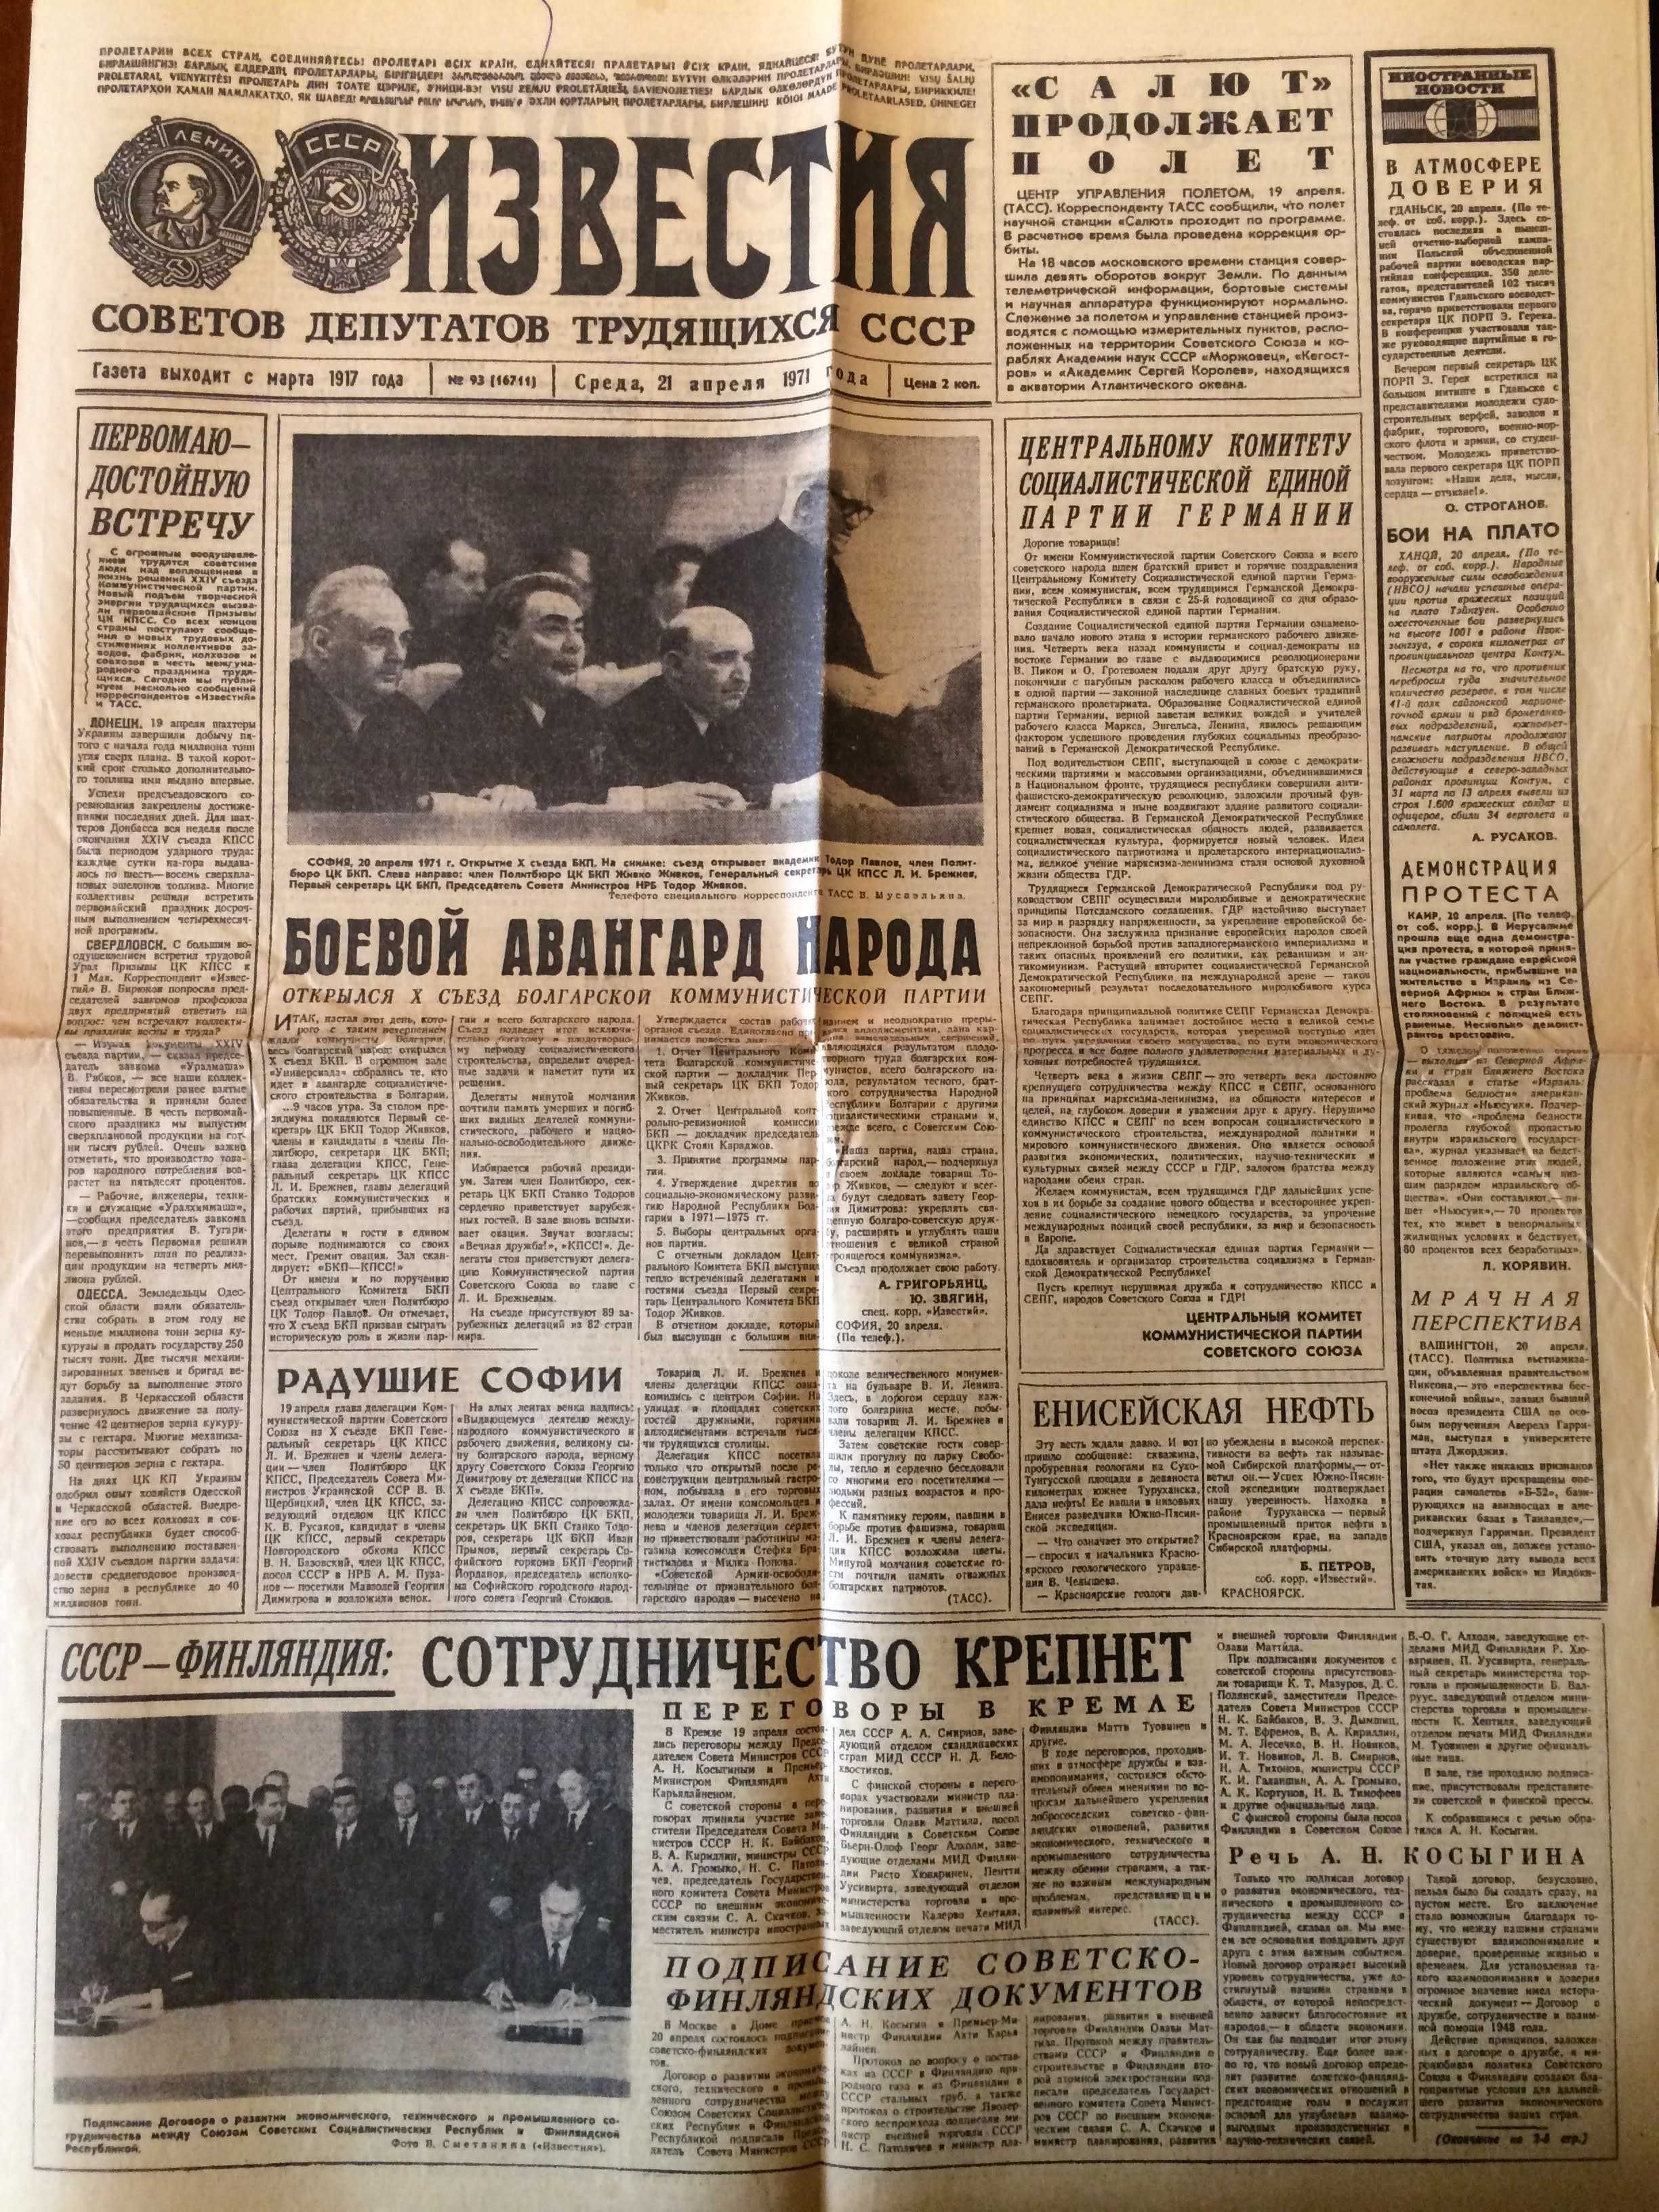 Газета "Известия" от 21 апреля 1971 г. СССР